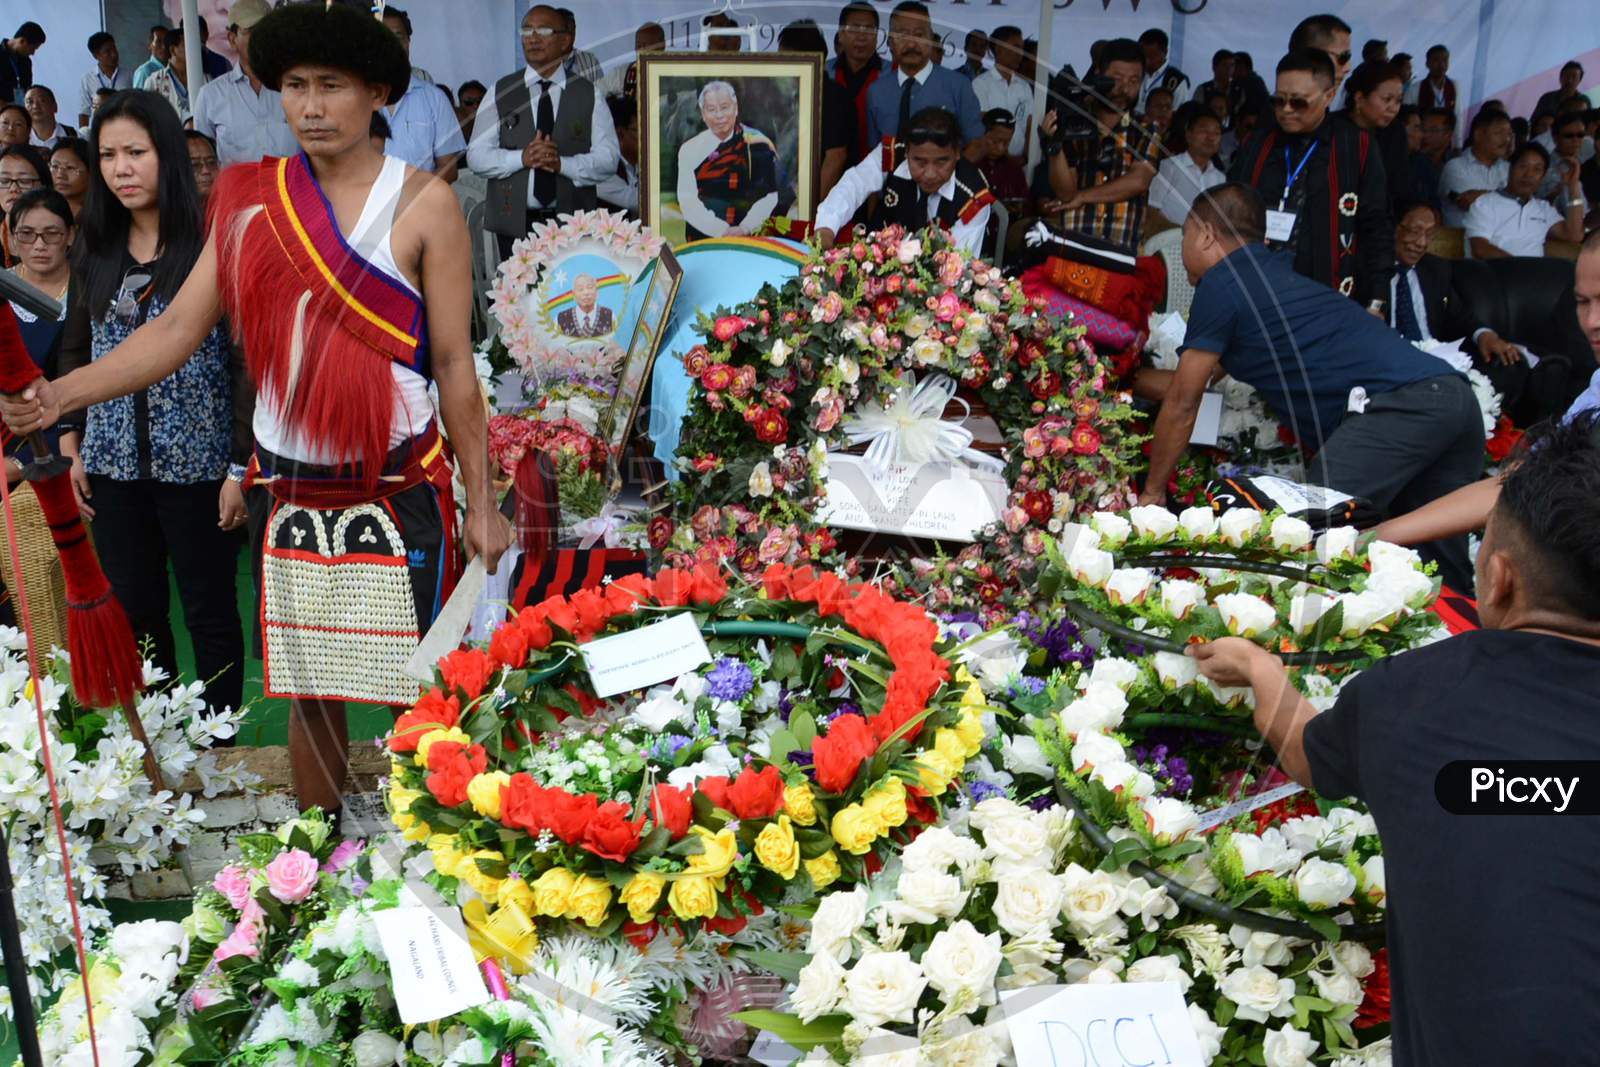 Isak Chishi Swu , Chairman Of NSCN  Funeral , Dimapur, Nagaland